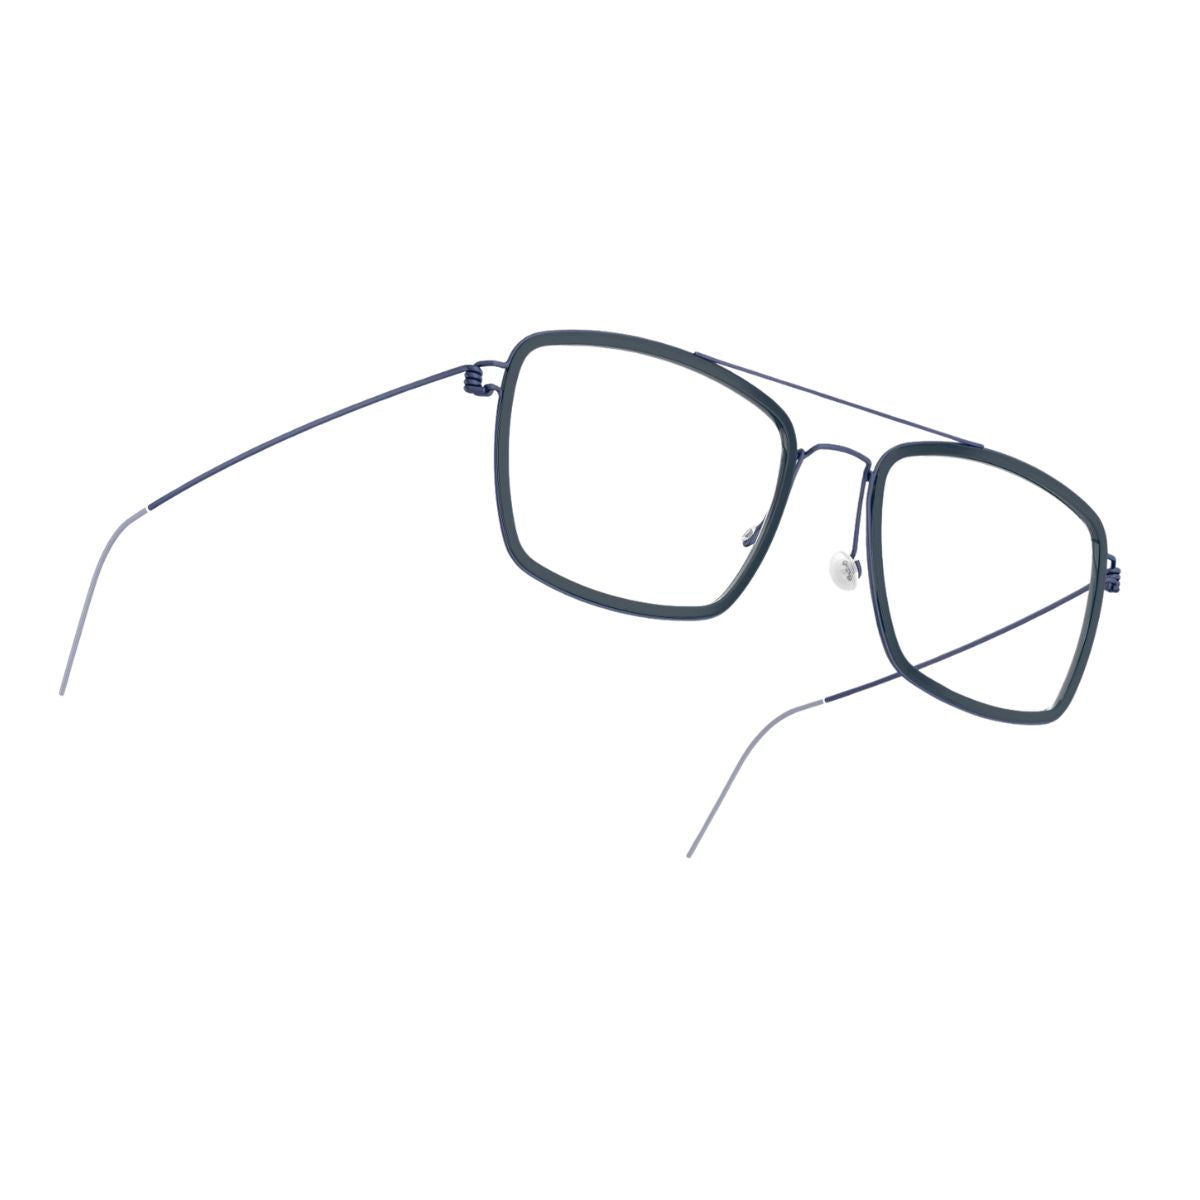 "Buy Online Lindberg Eyewear Frames For Men's & Women's At Optorium"